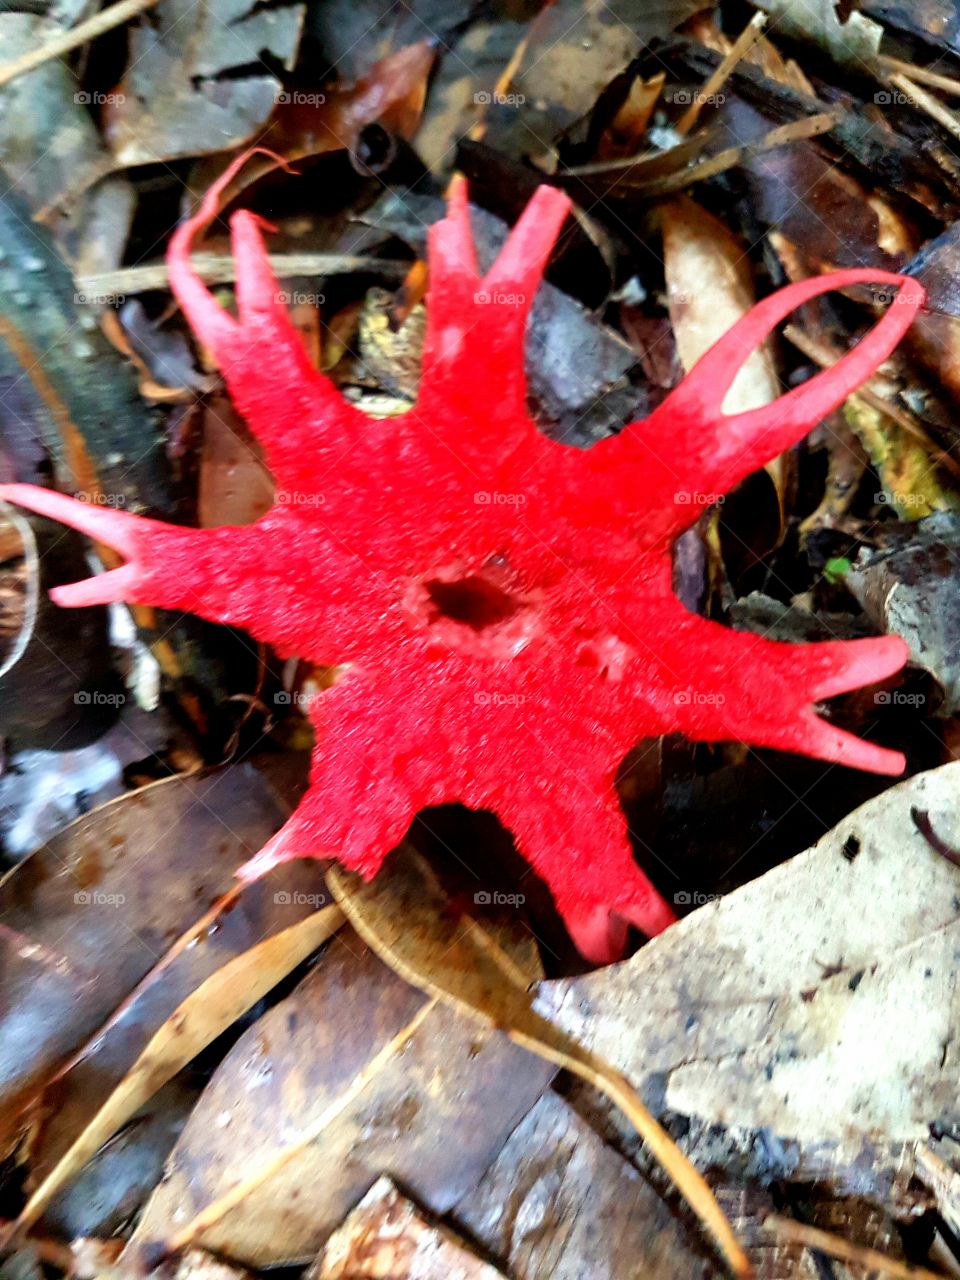 amazing red star shaped fungi